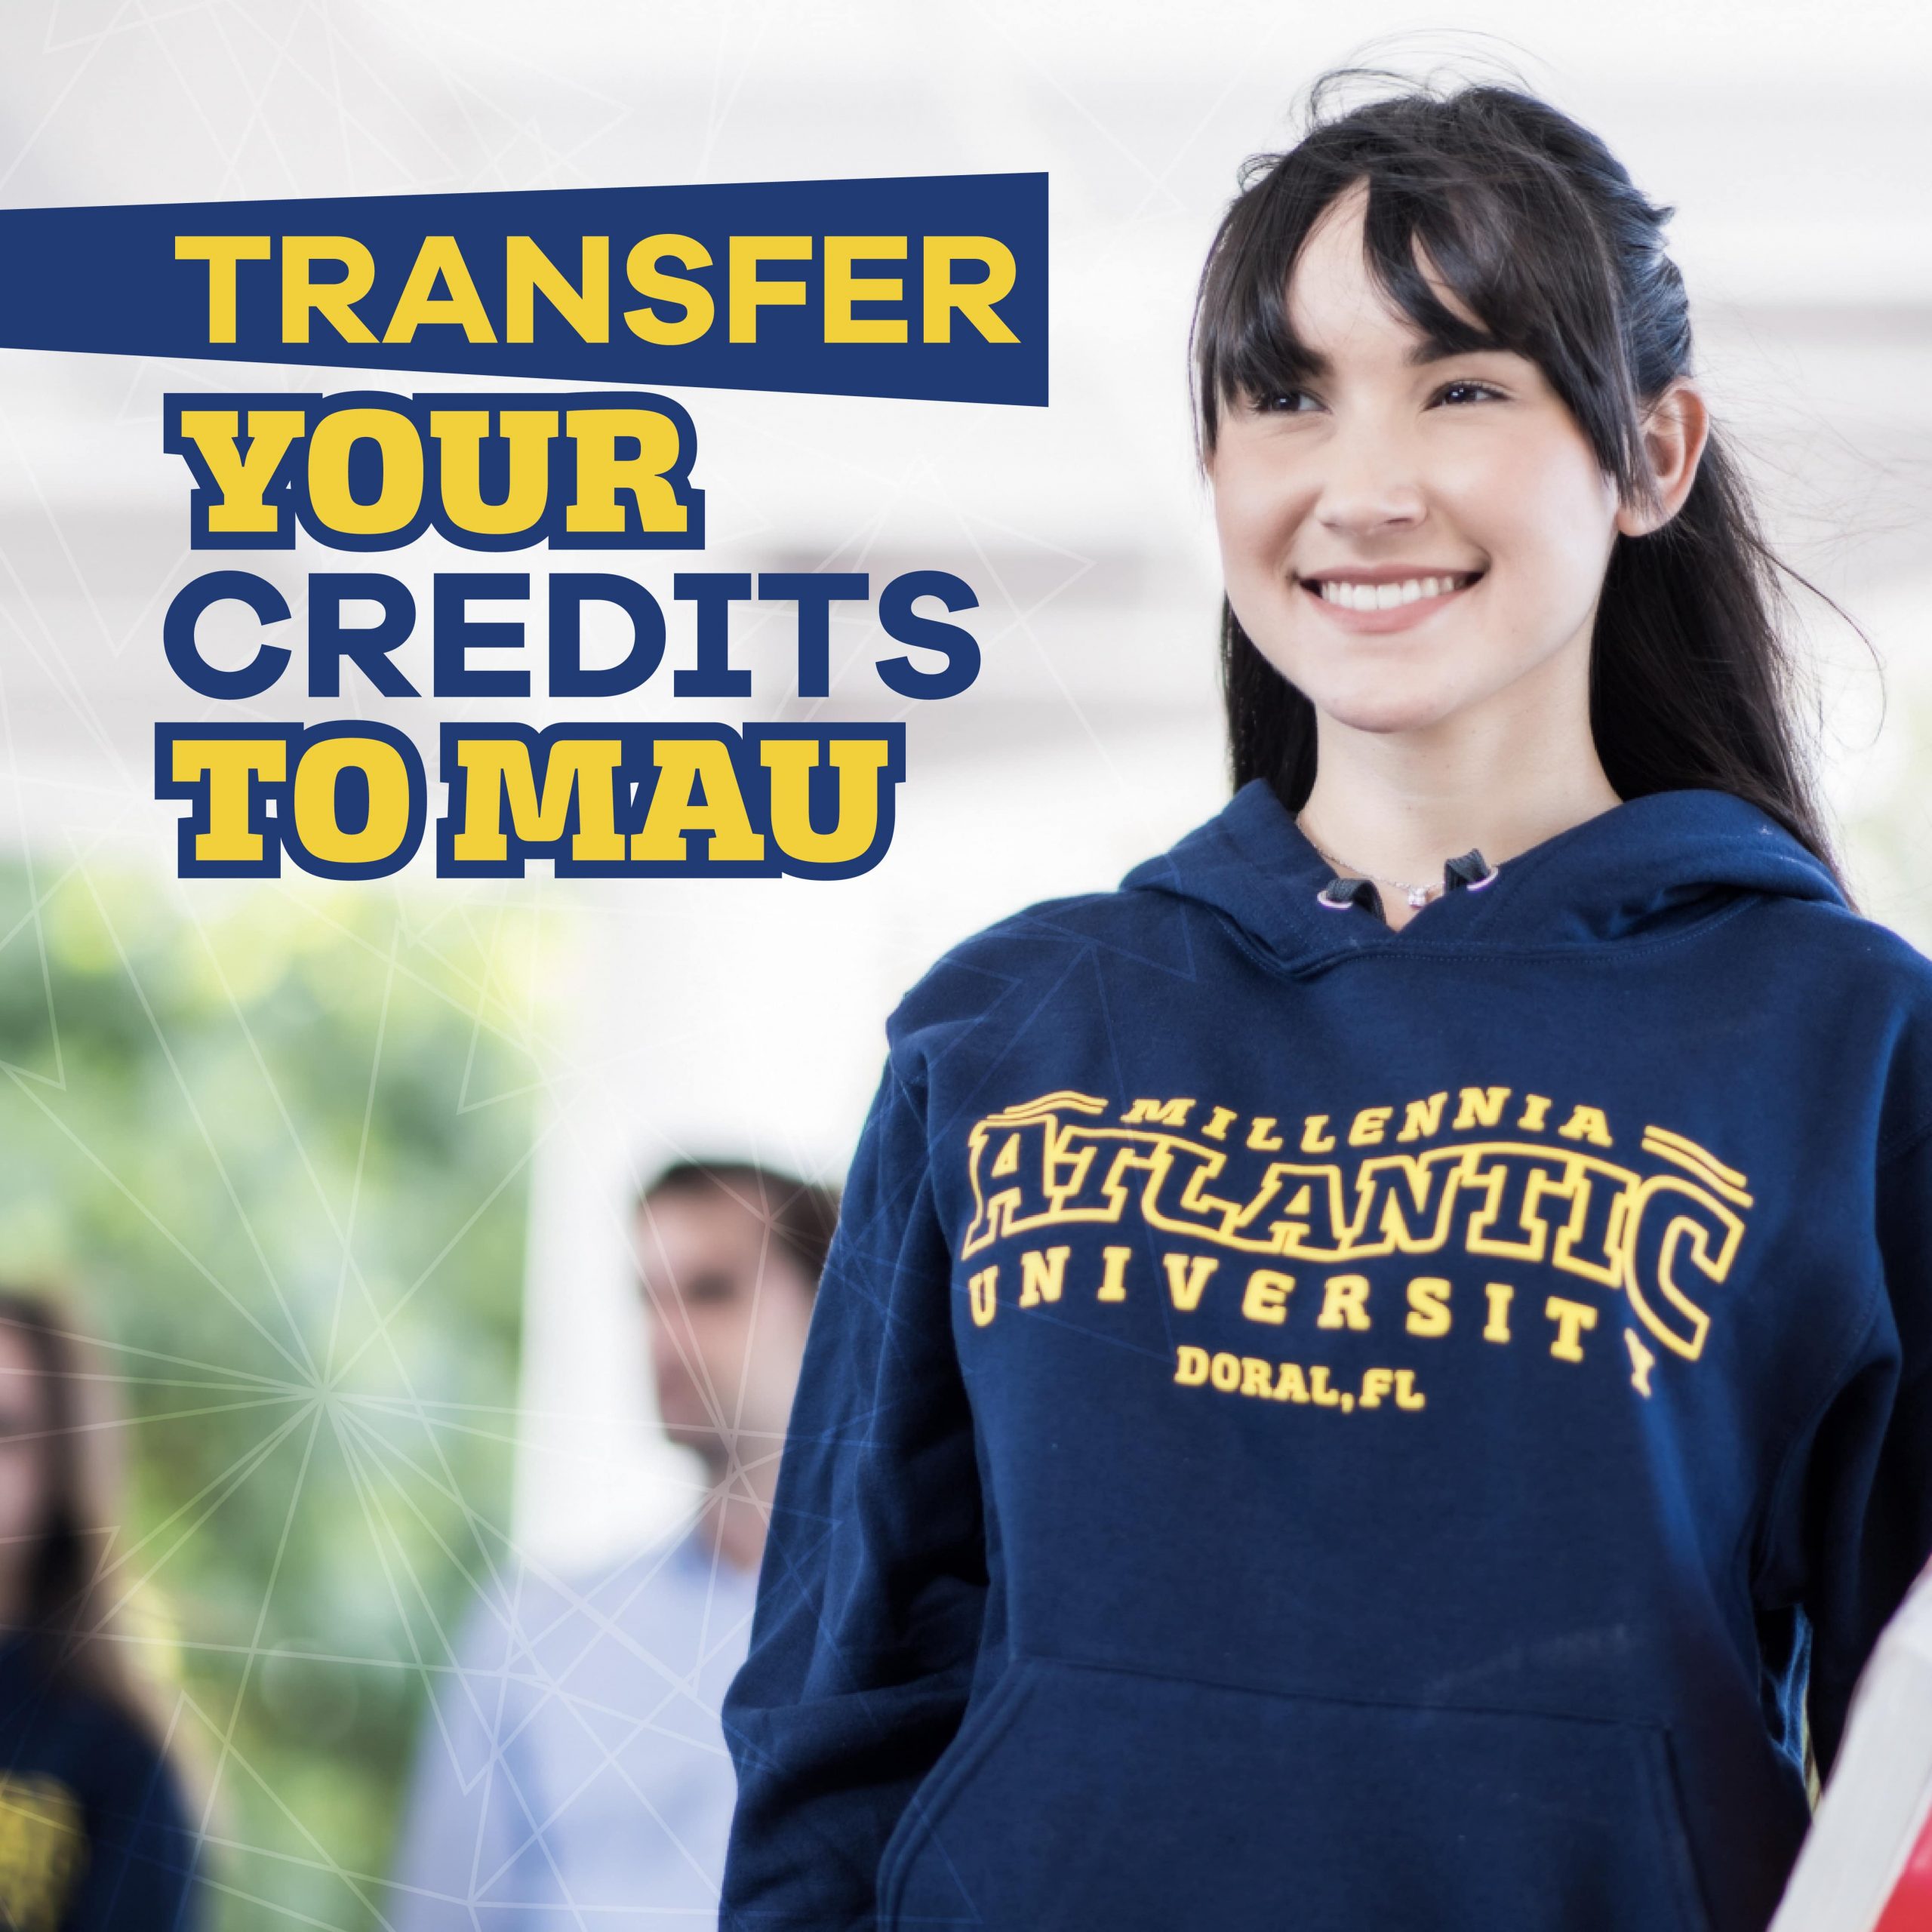 Millennia Atlantic University Female student wearing MAU sweatshirt. Text says Transfer your credits to MAU.